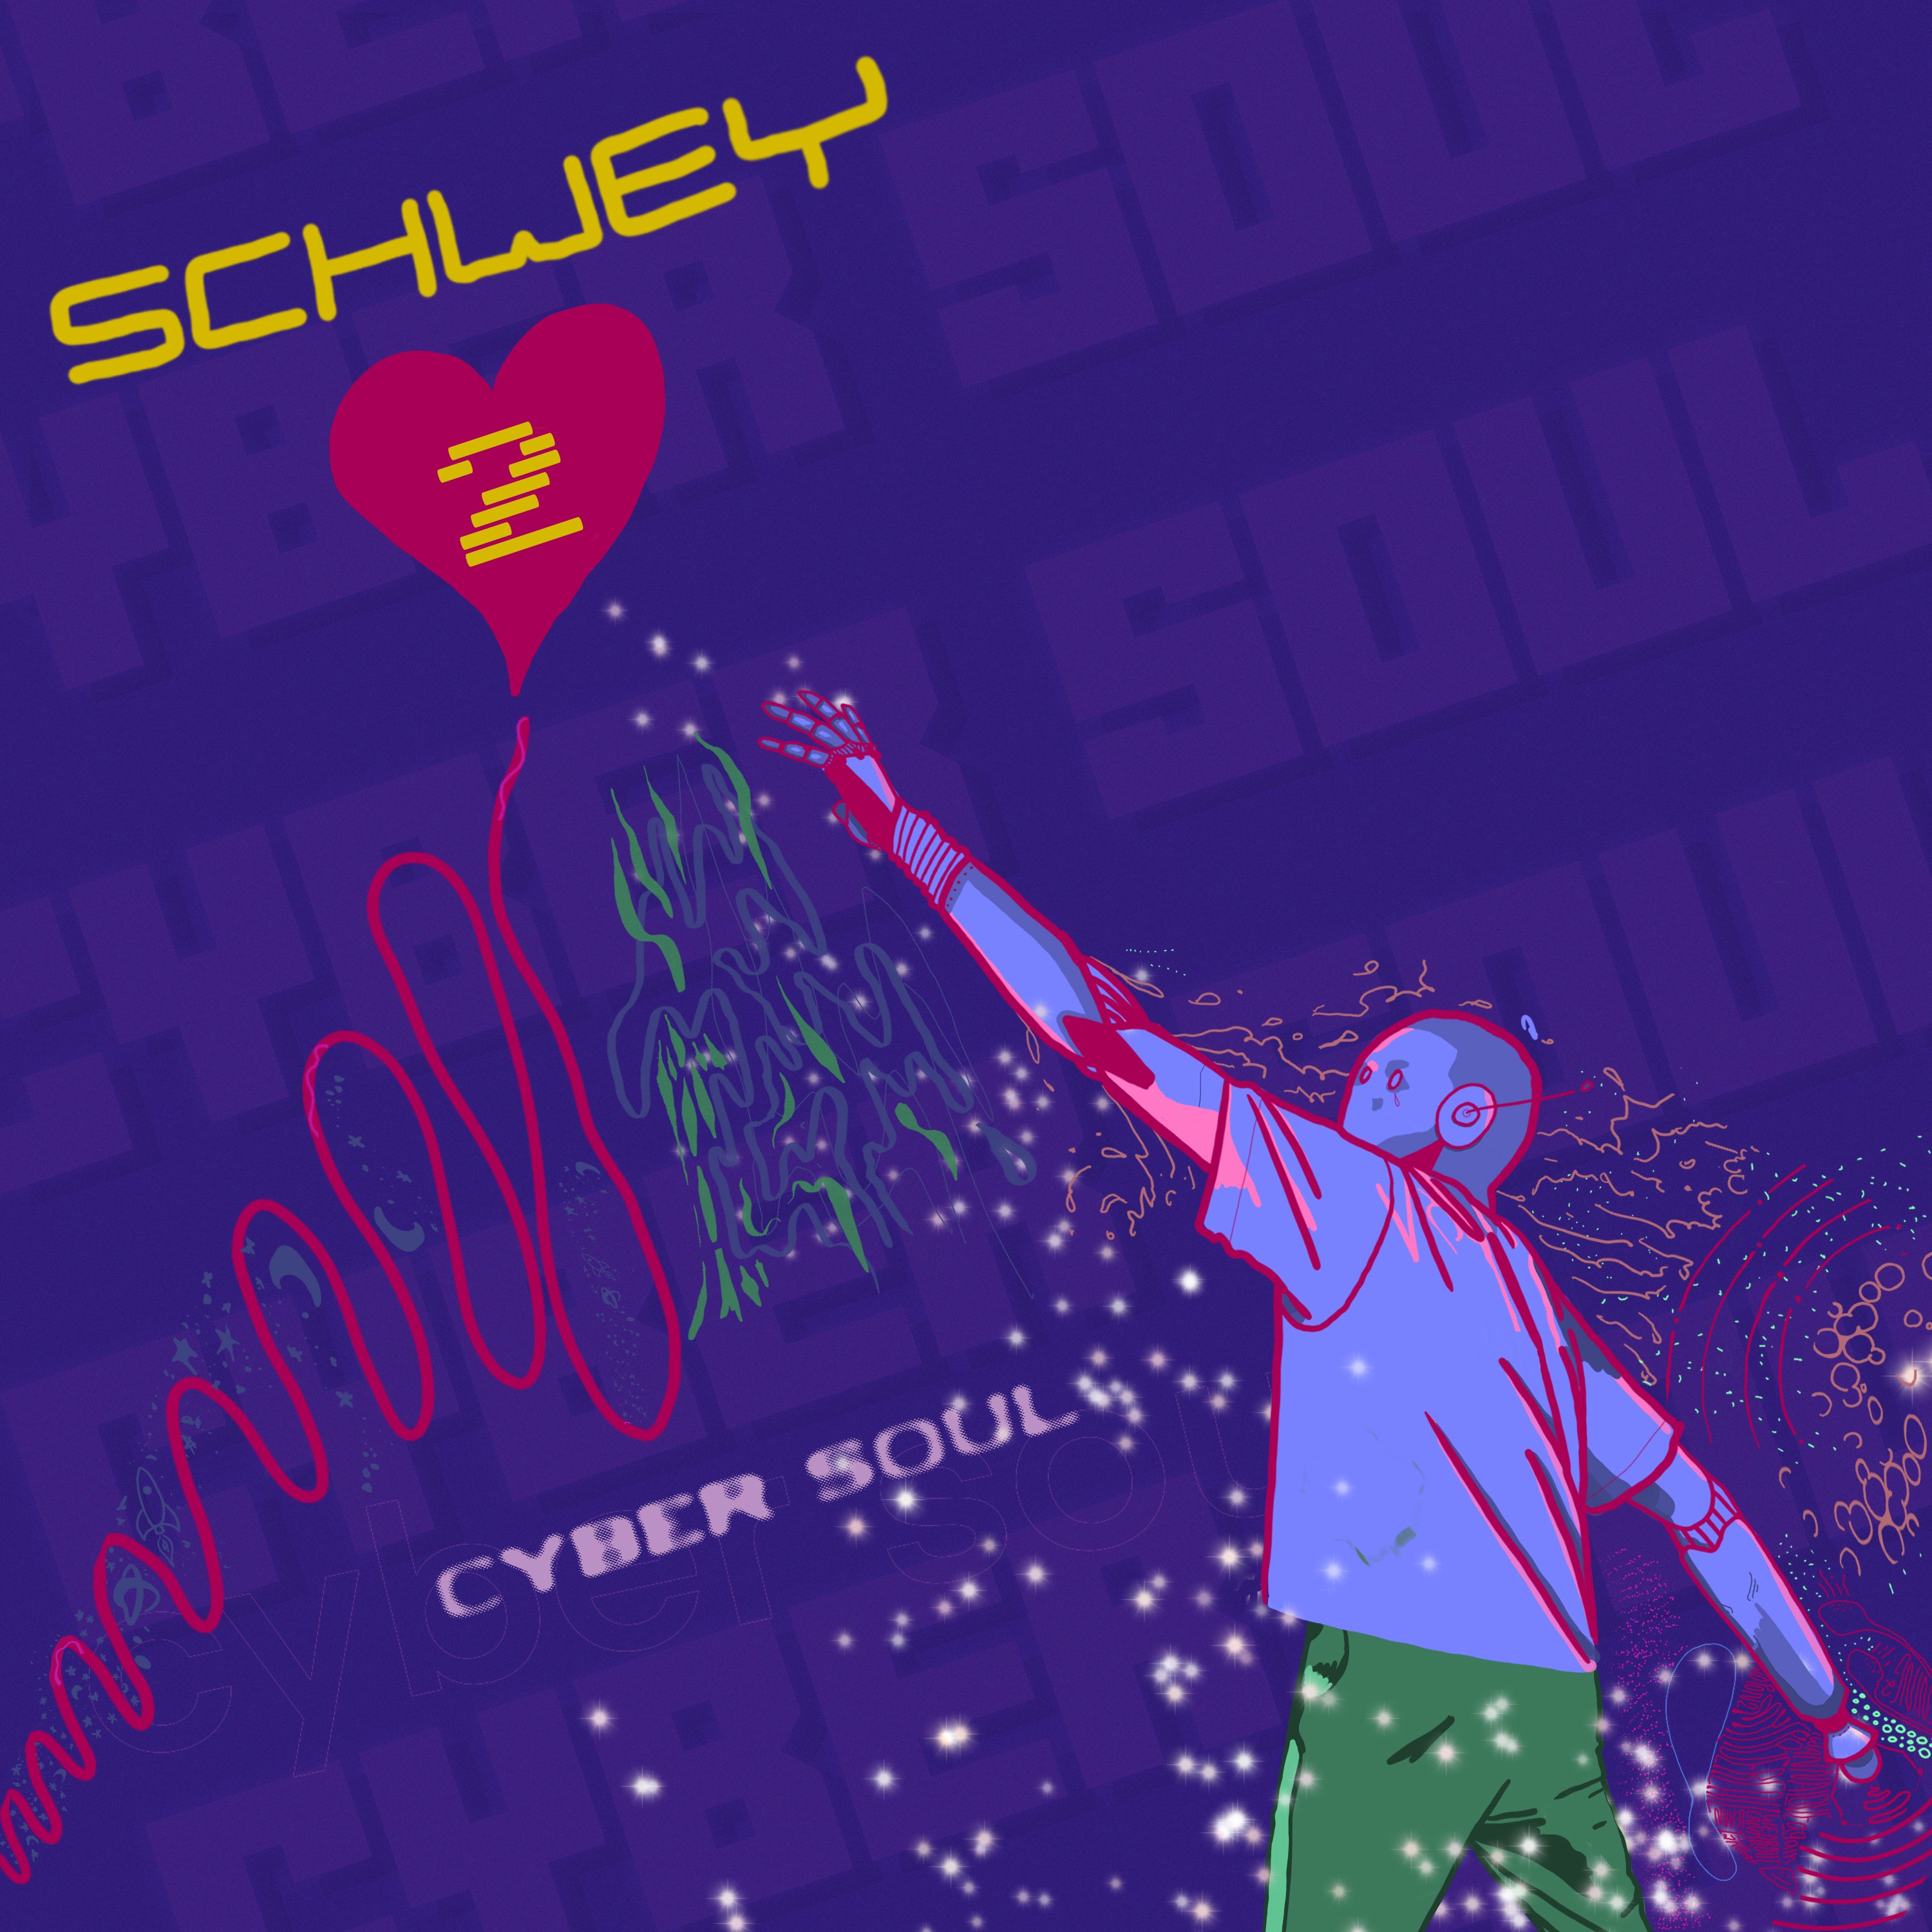 Schwey 2: Cyber Soul (CD Album)